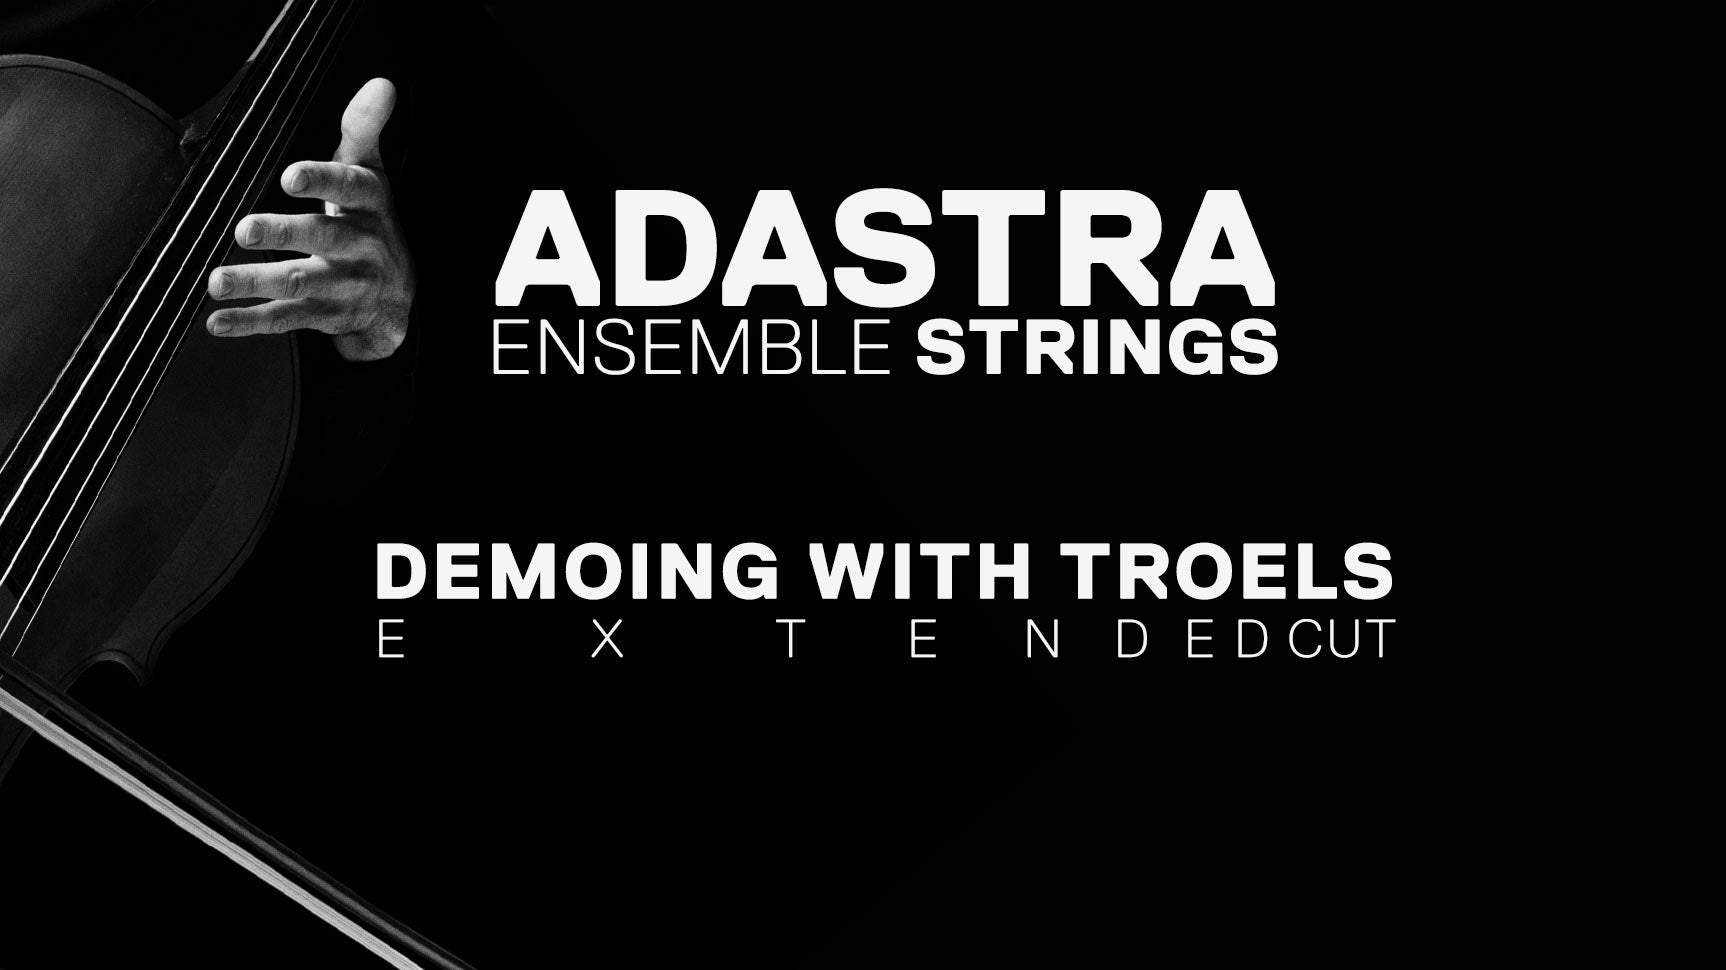 Adastra Ensemble Strings